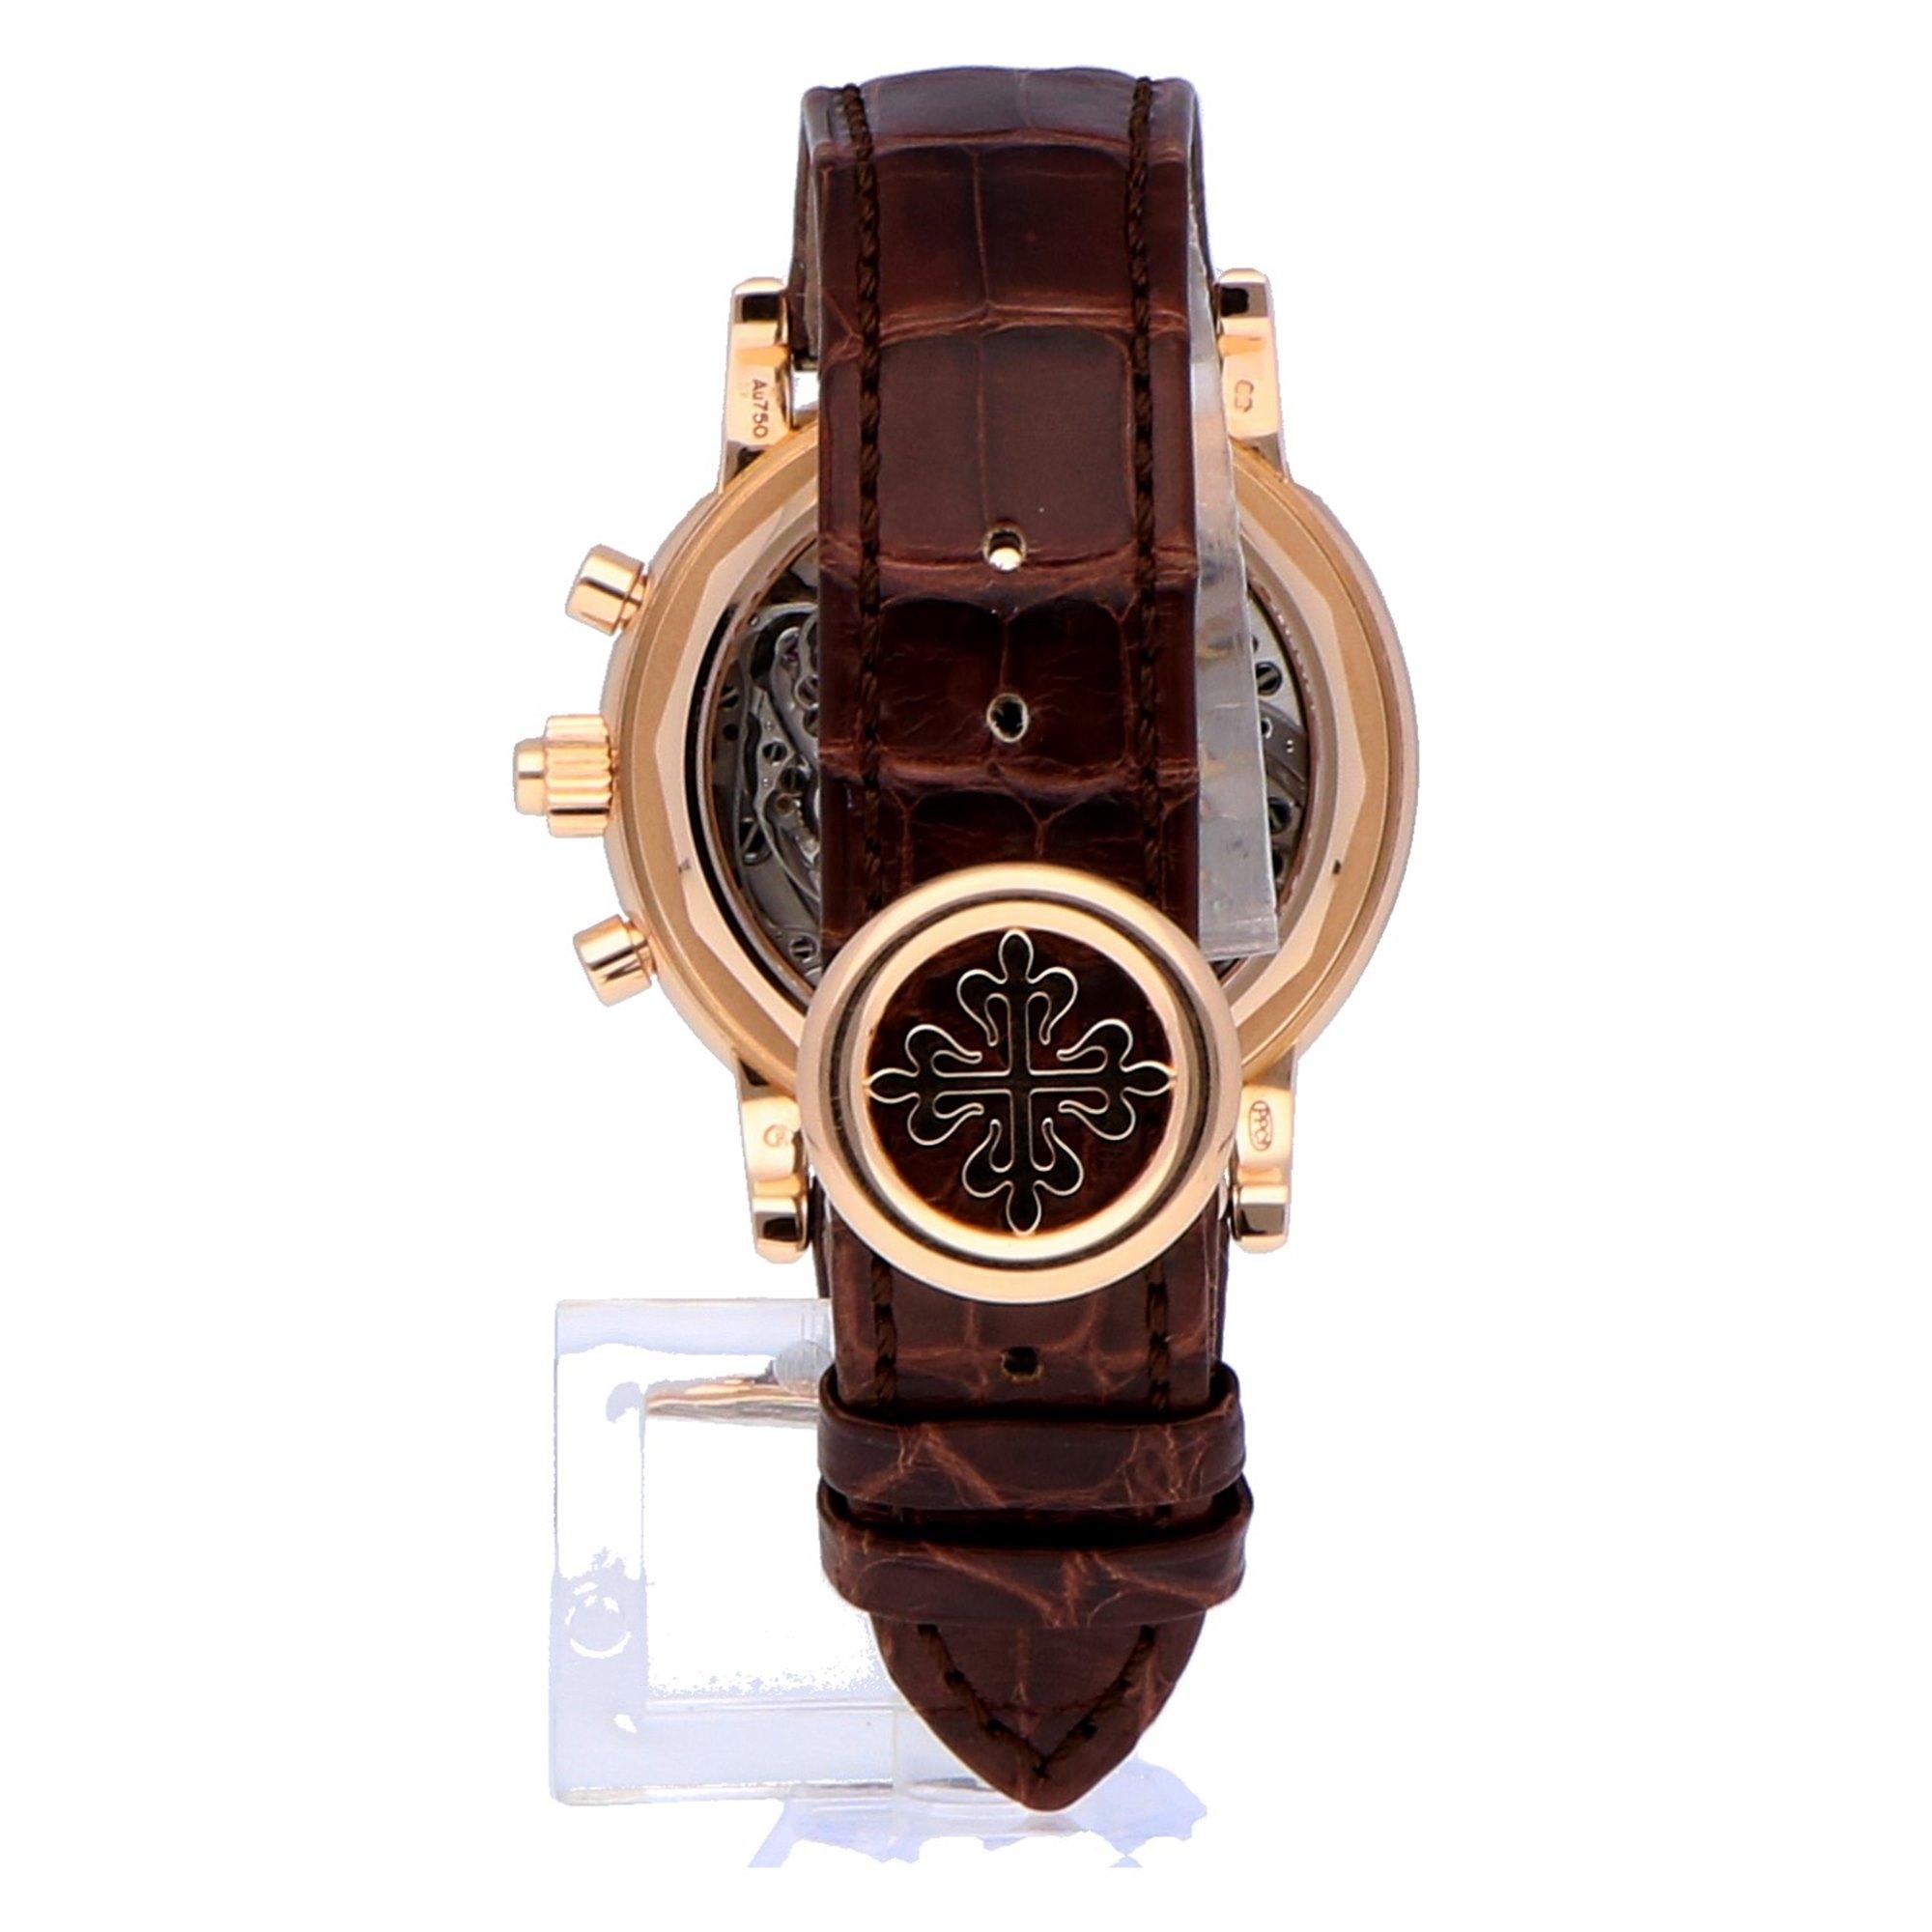 Patek Philippe Grand Perpetual Calendar Chronograph Rose Gold 5204R-001 Watch 2